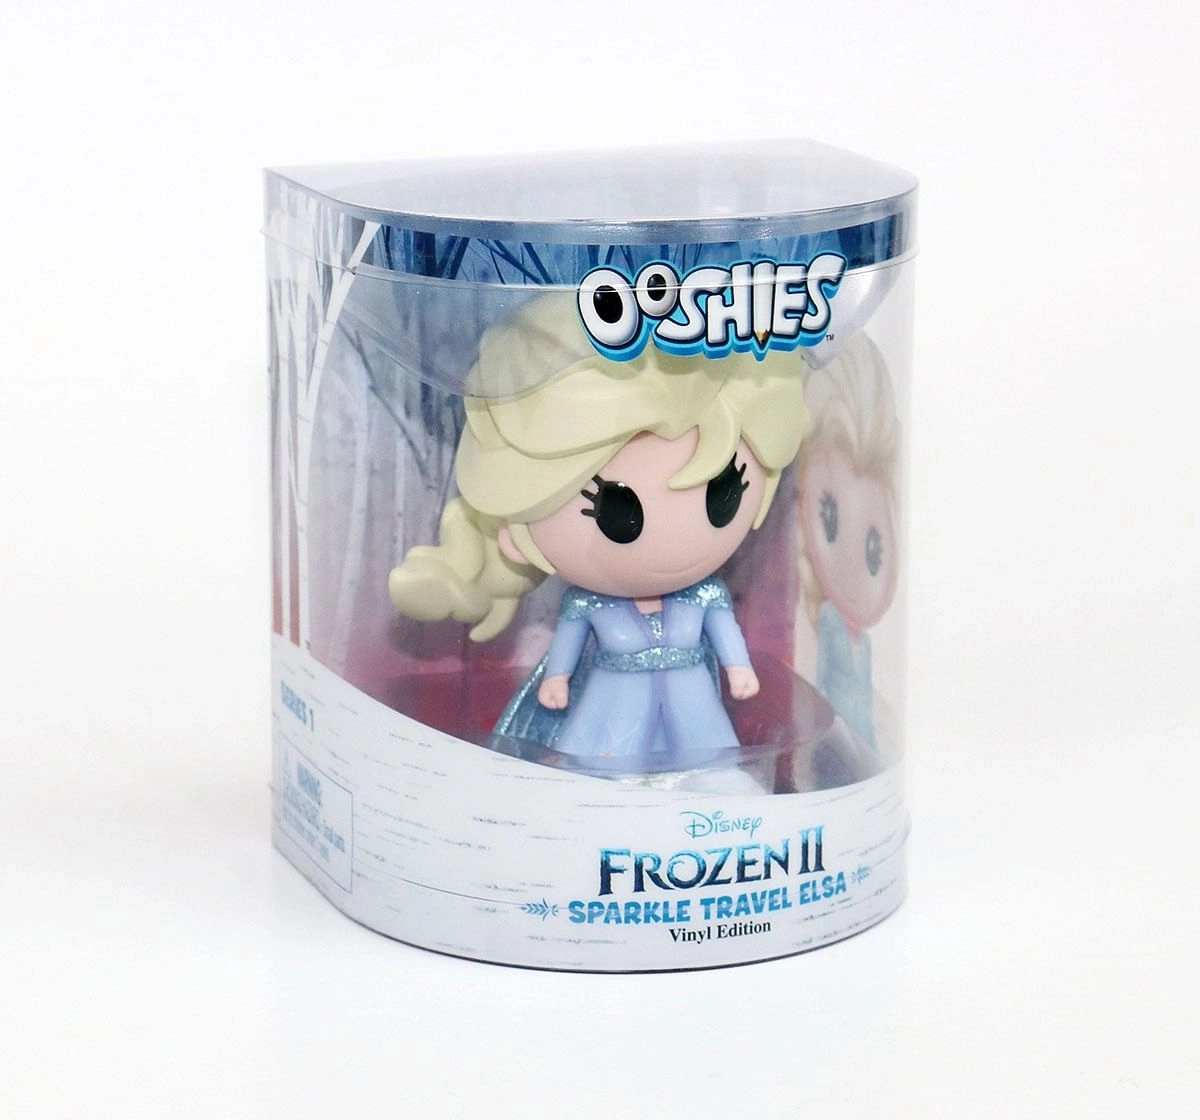 Frozen II Ooshies 4" Vinyl Edition for Kids age 3Y+ (Assorted)